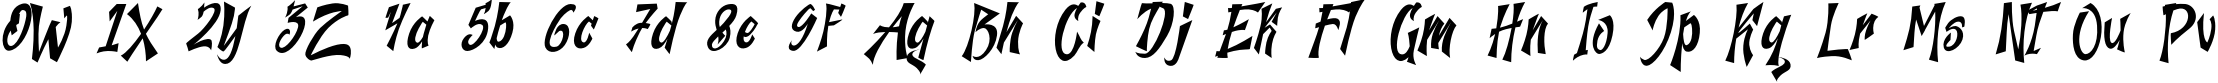 Пример написания английского алфавита шрифтом The Jazh Demo